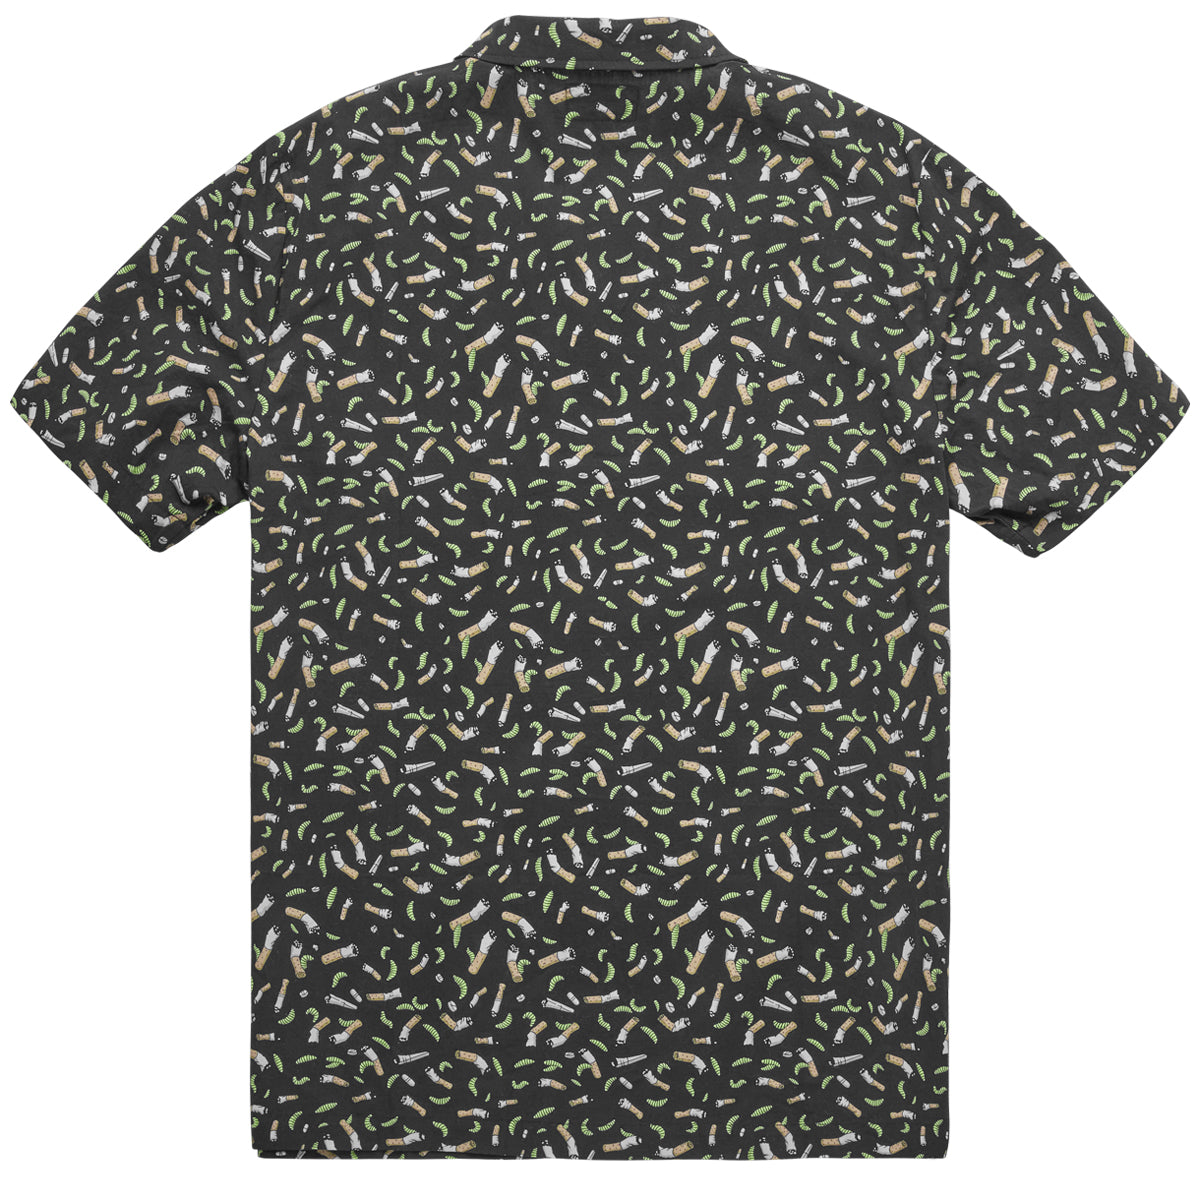 Emerica x Creature Hawaiian Shirt - Black image 2